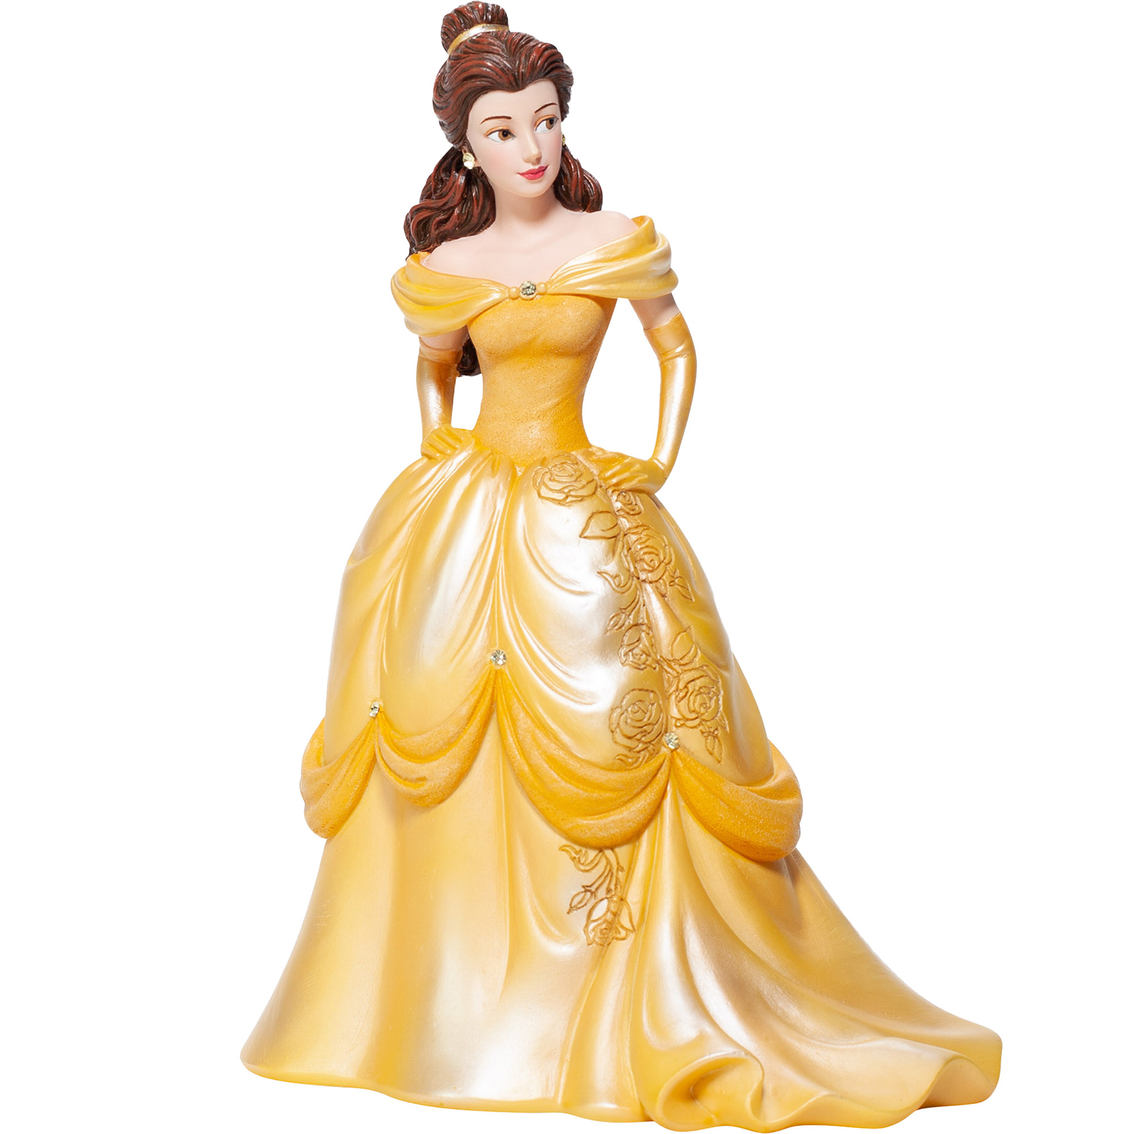 Disney Showcase Couture de Force Belle Figurine - Image 1 of 6